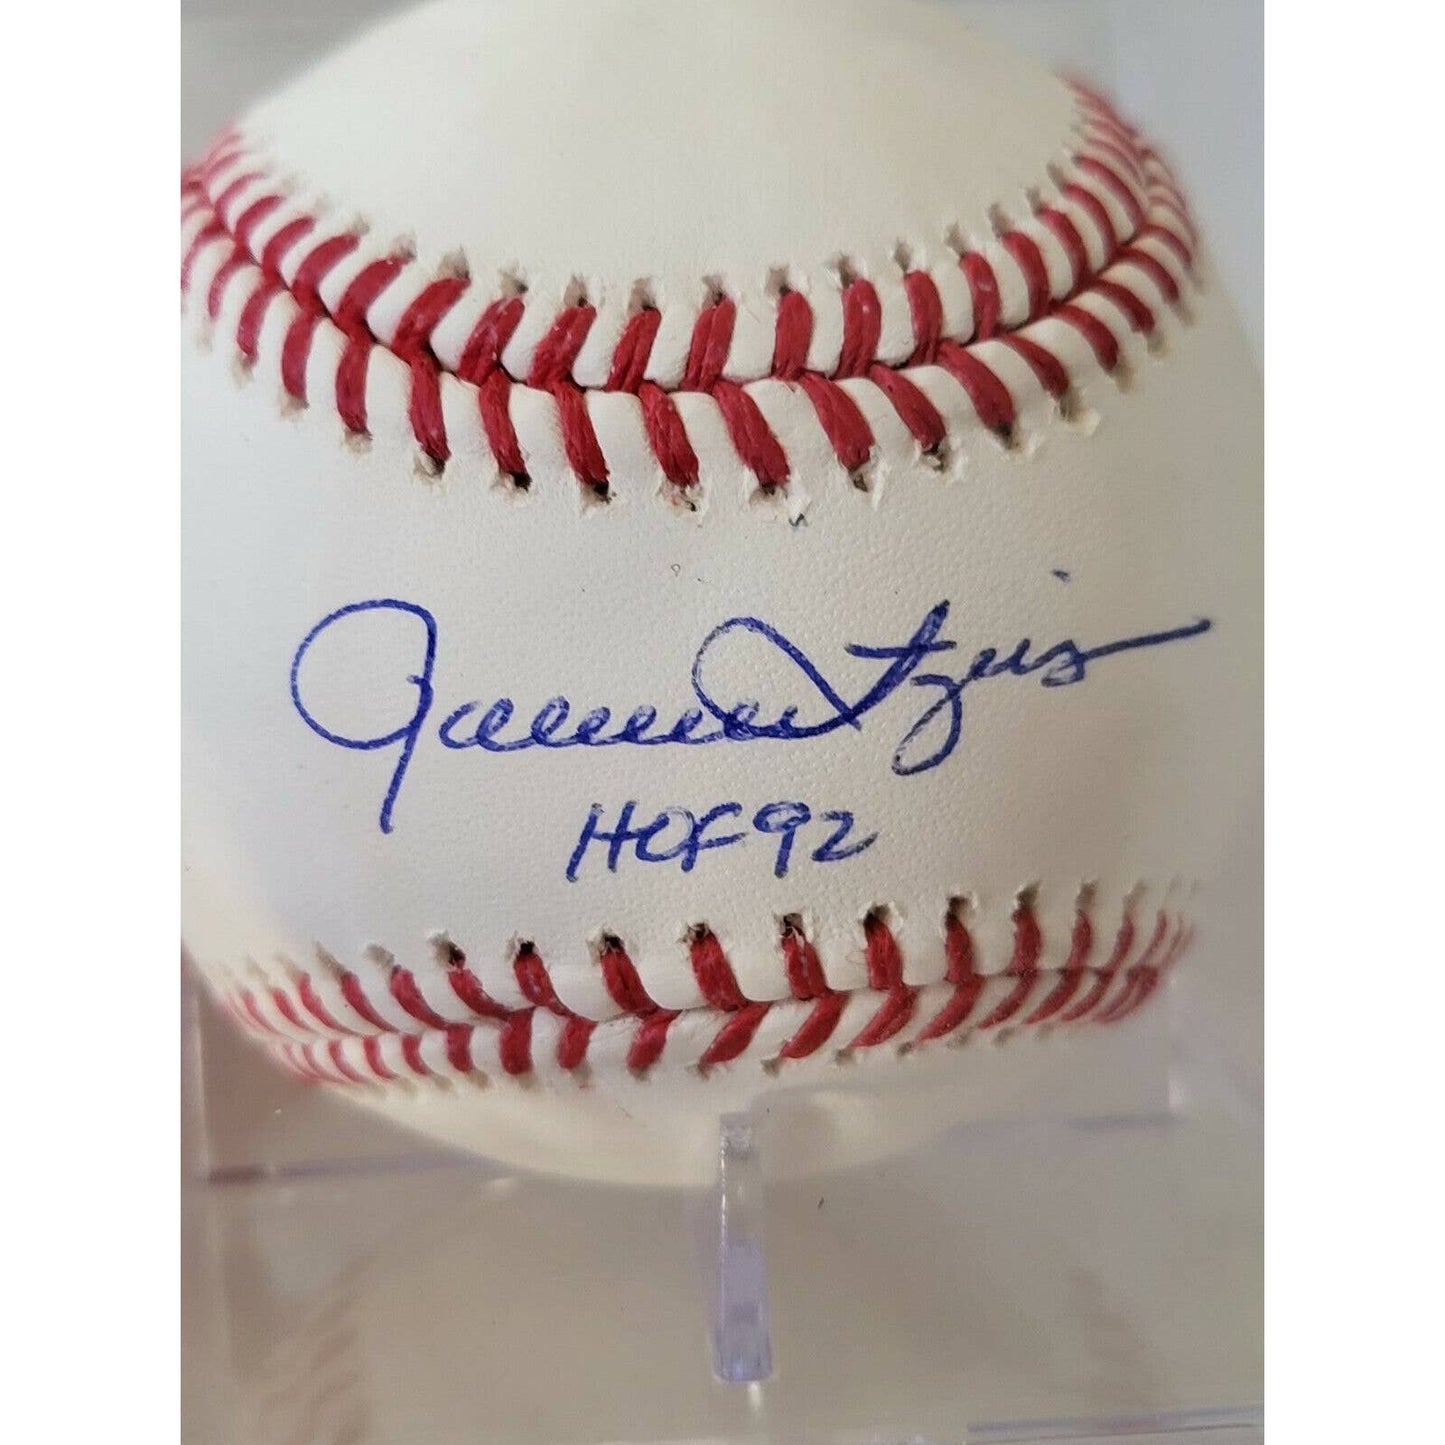 Rollie Fingers Autographed/Signed Baseball TRISTAR HOF 92 - TreasuresEvolved